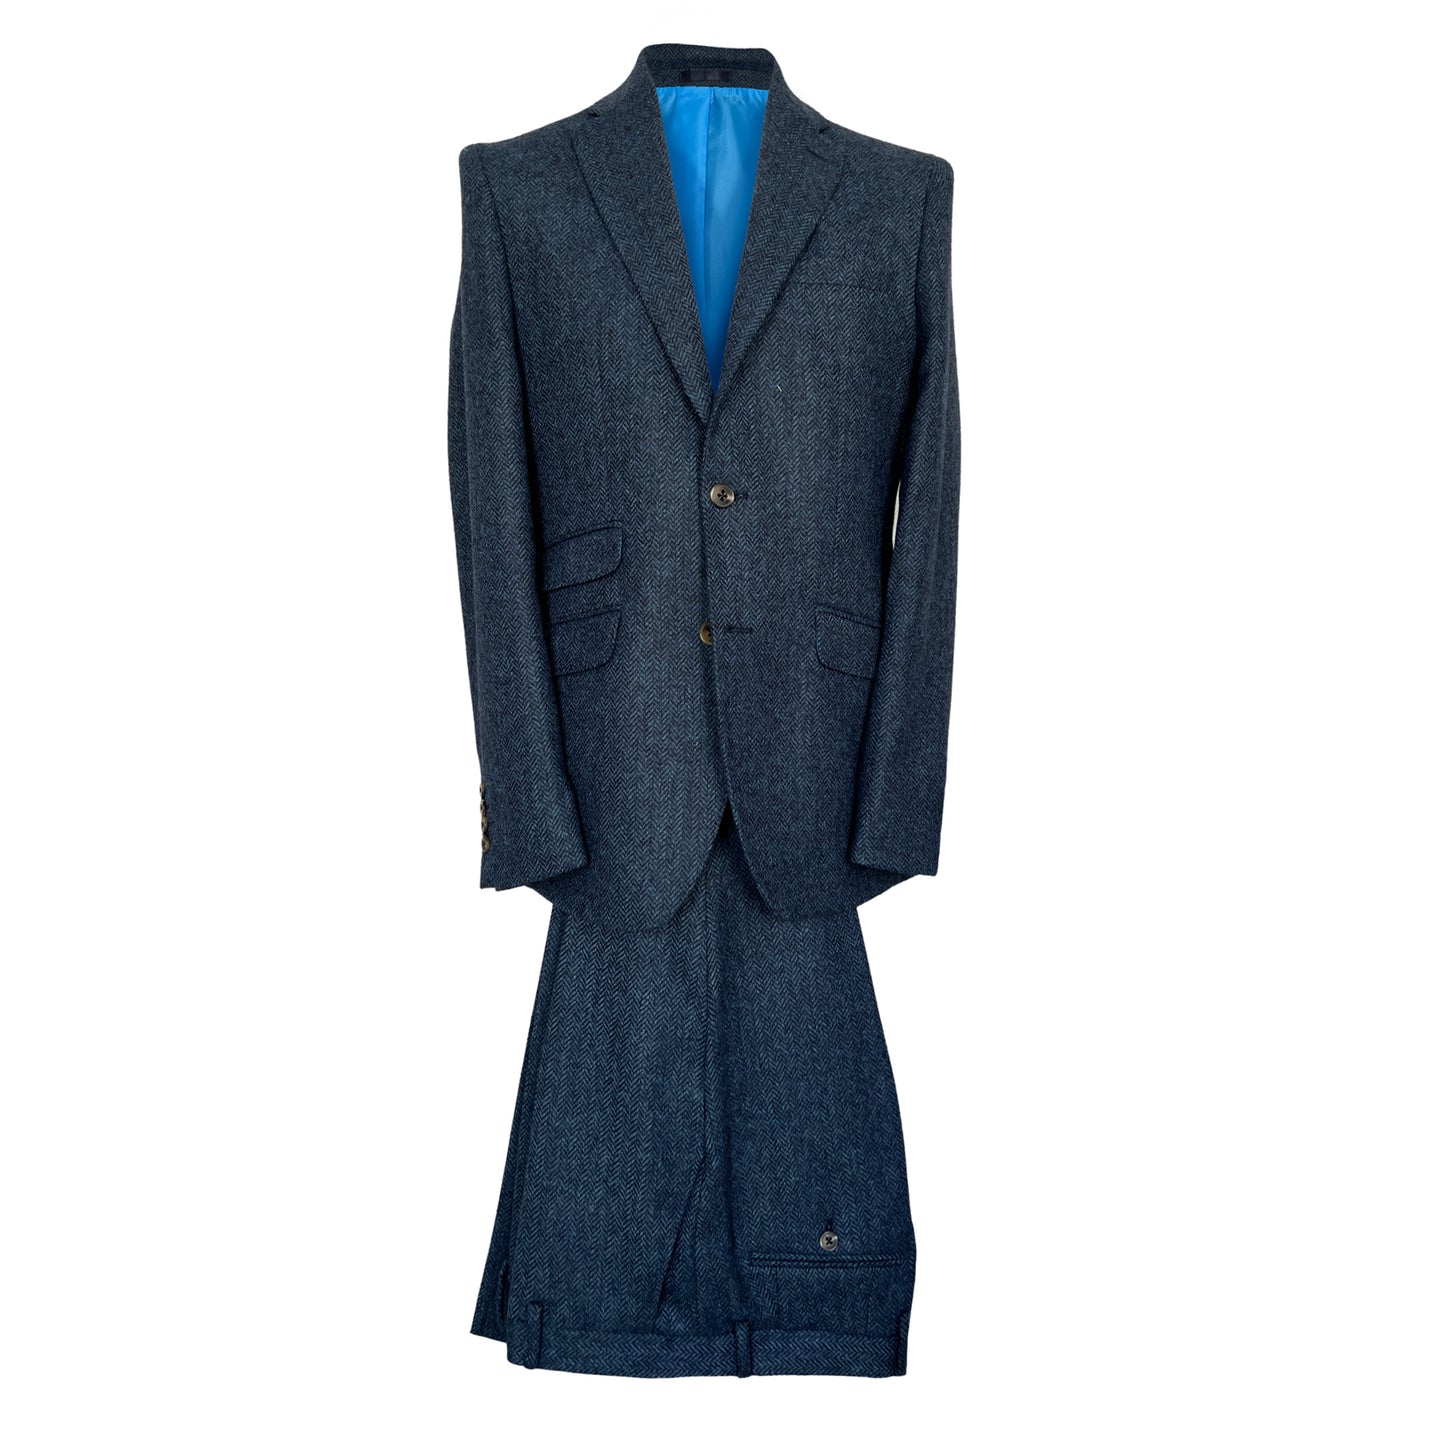 Horace Barton Navy Herringbone Tweed Suit